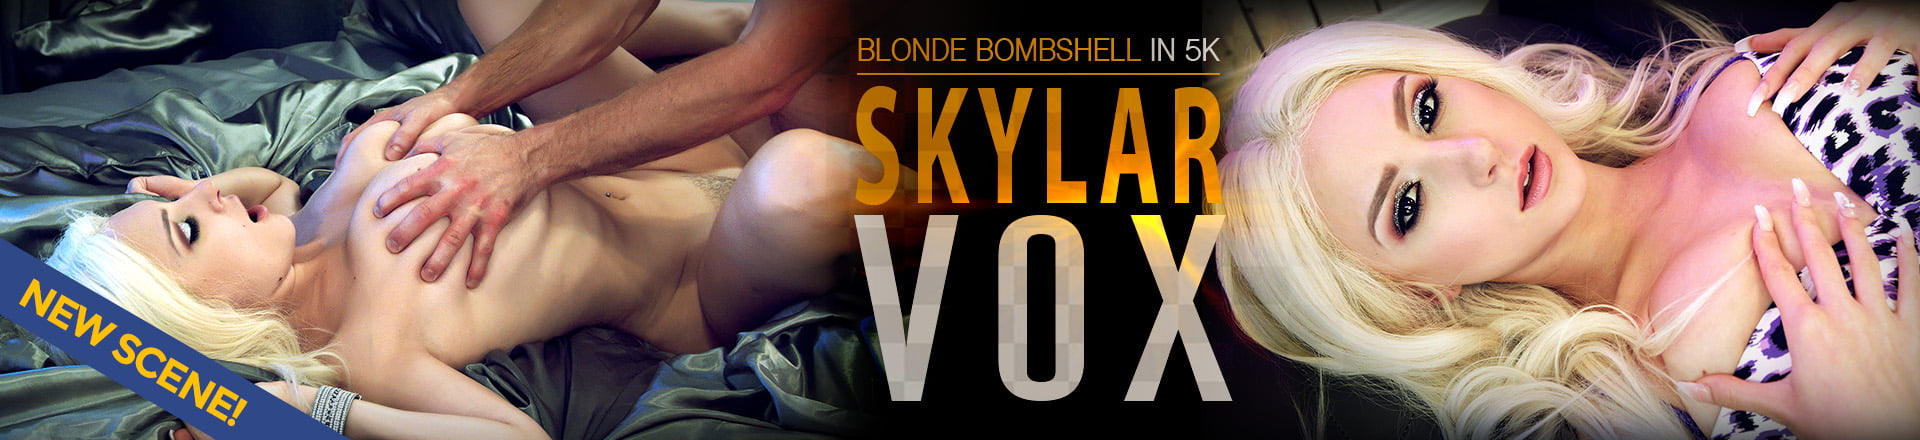 Skylar Vox in stunning 5K